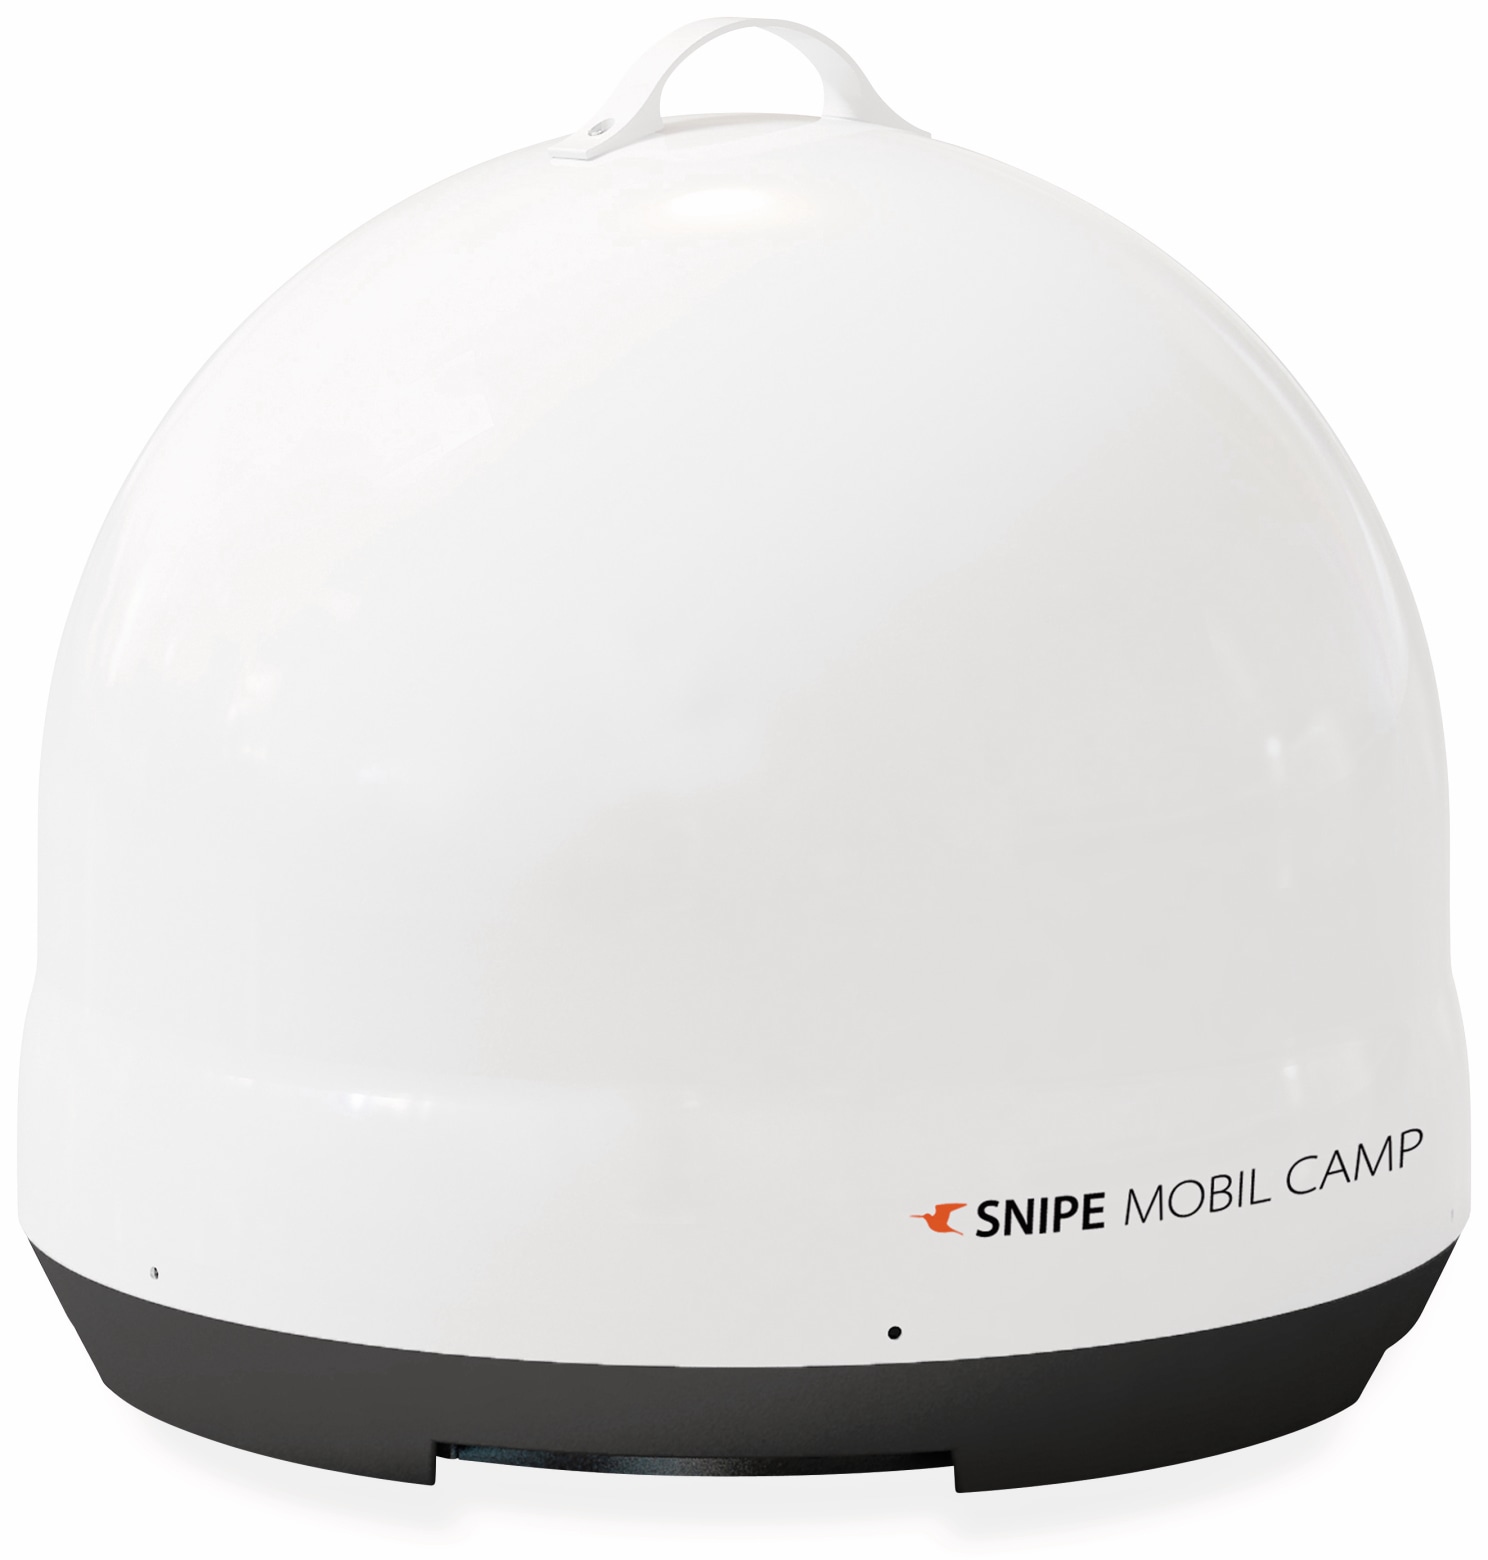 Selfsat Campingantenne Snipe Mobil Camp, Twin